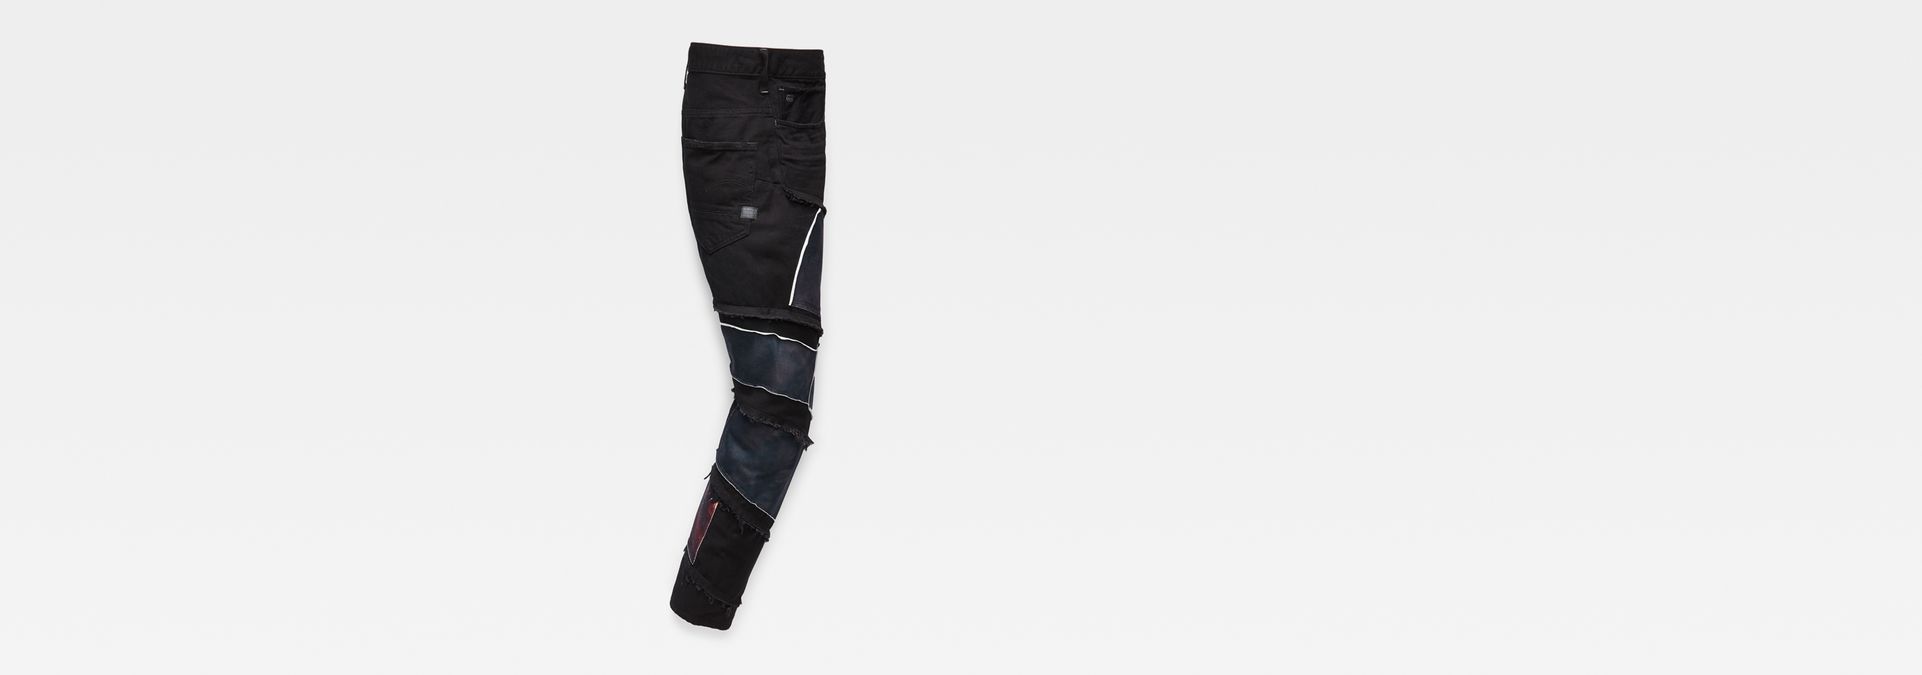 Spiraq RFTP Patches Eclipse 3D Slim Jeans | Black | G-Star RAW®